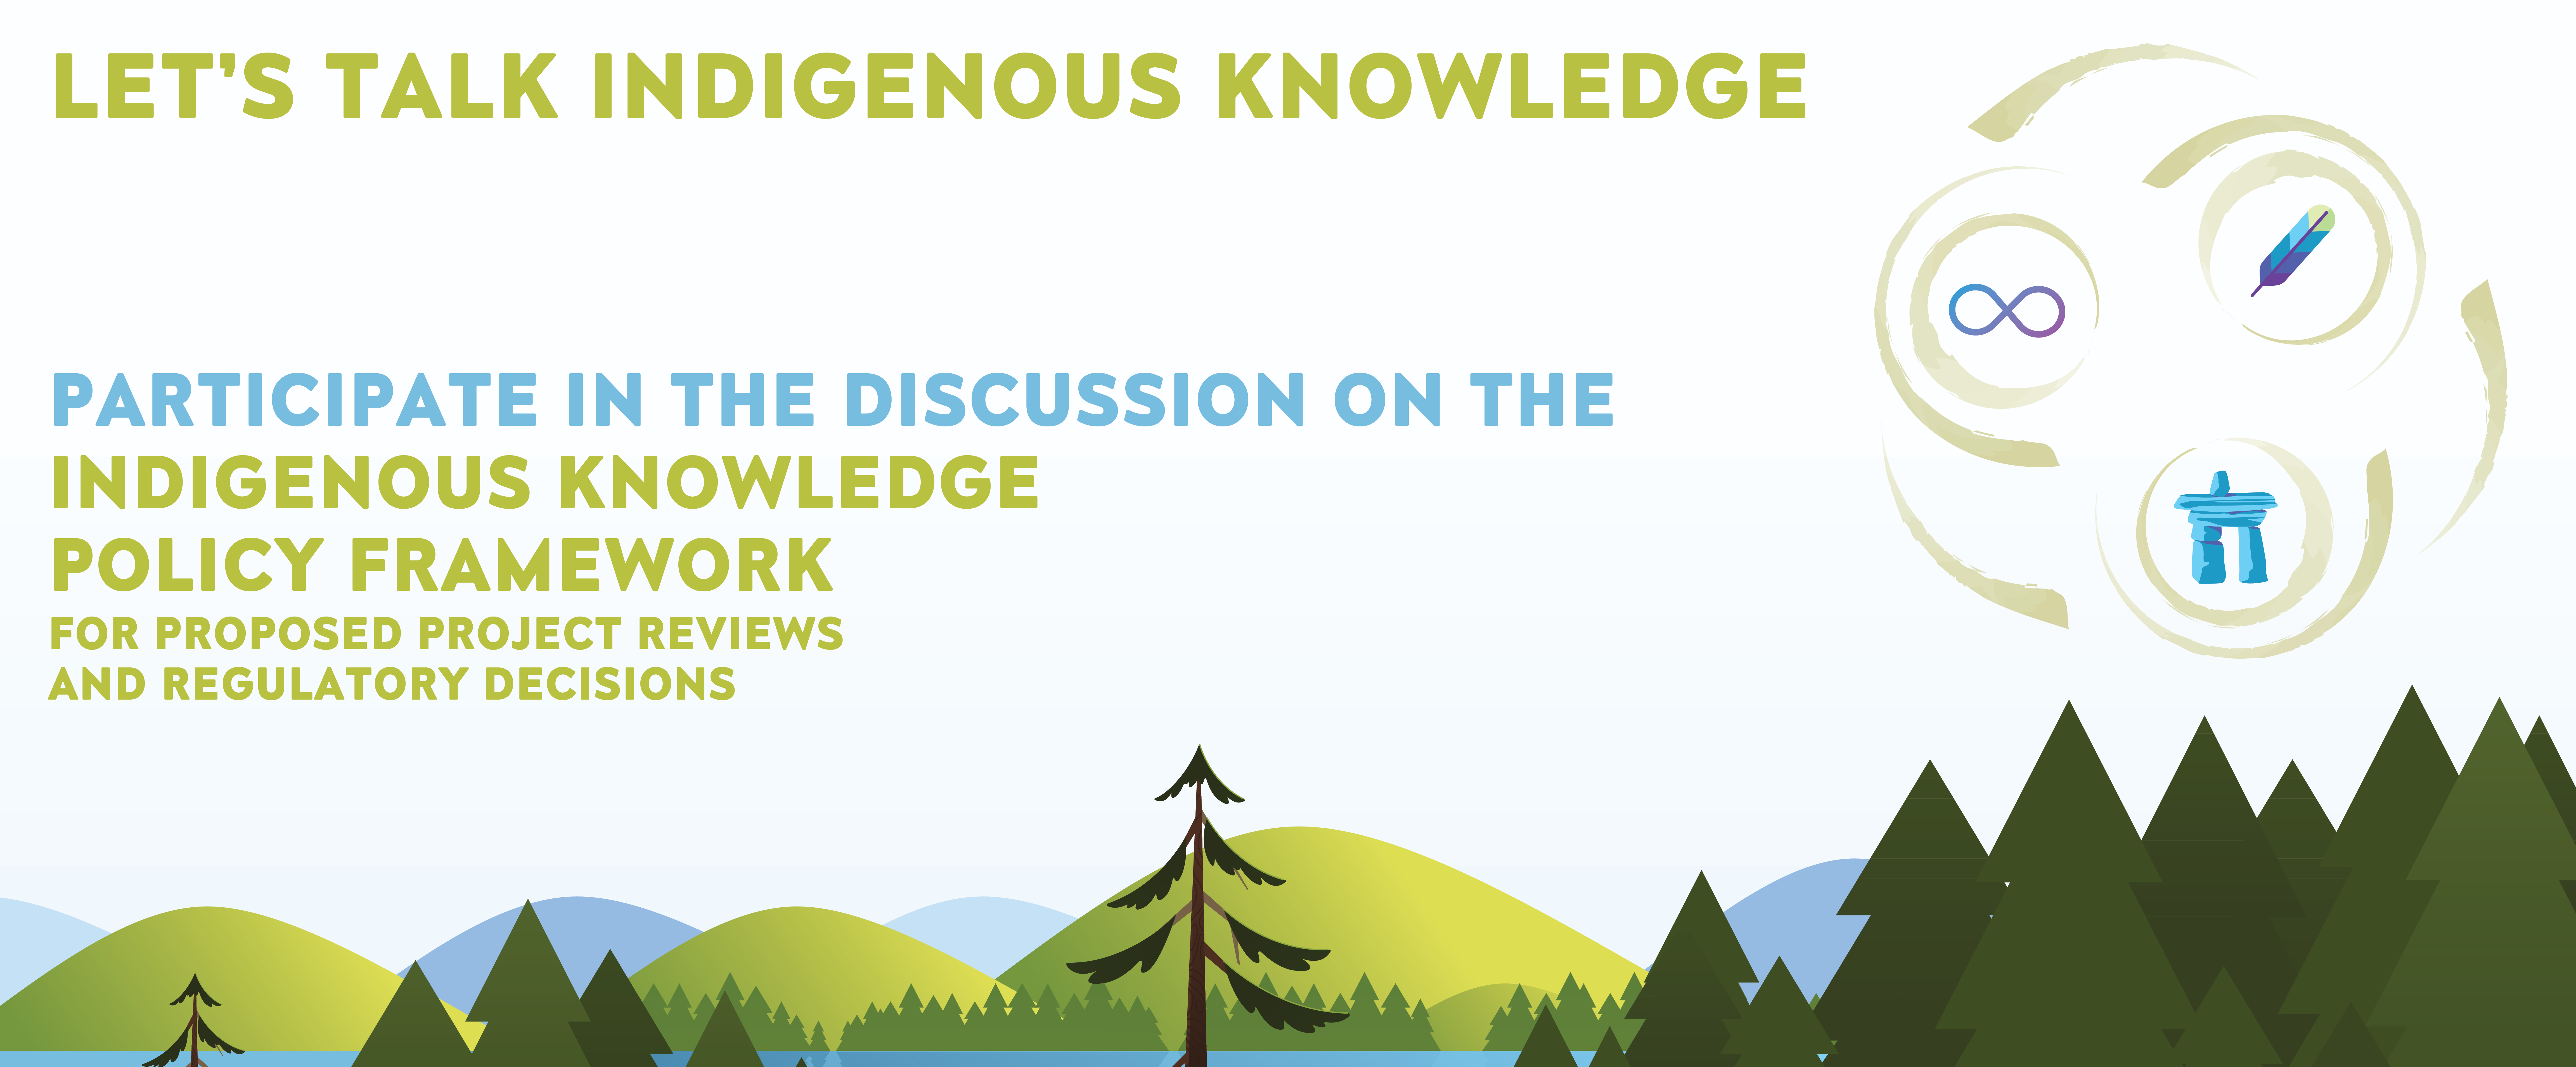 Let's talk Indigenous knowledge